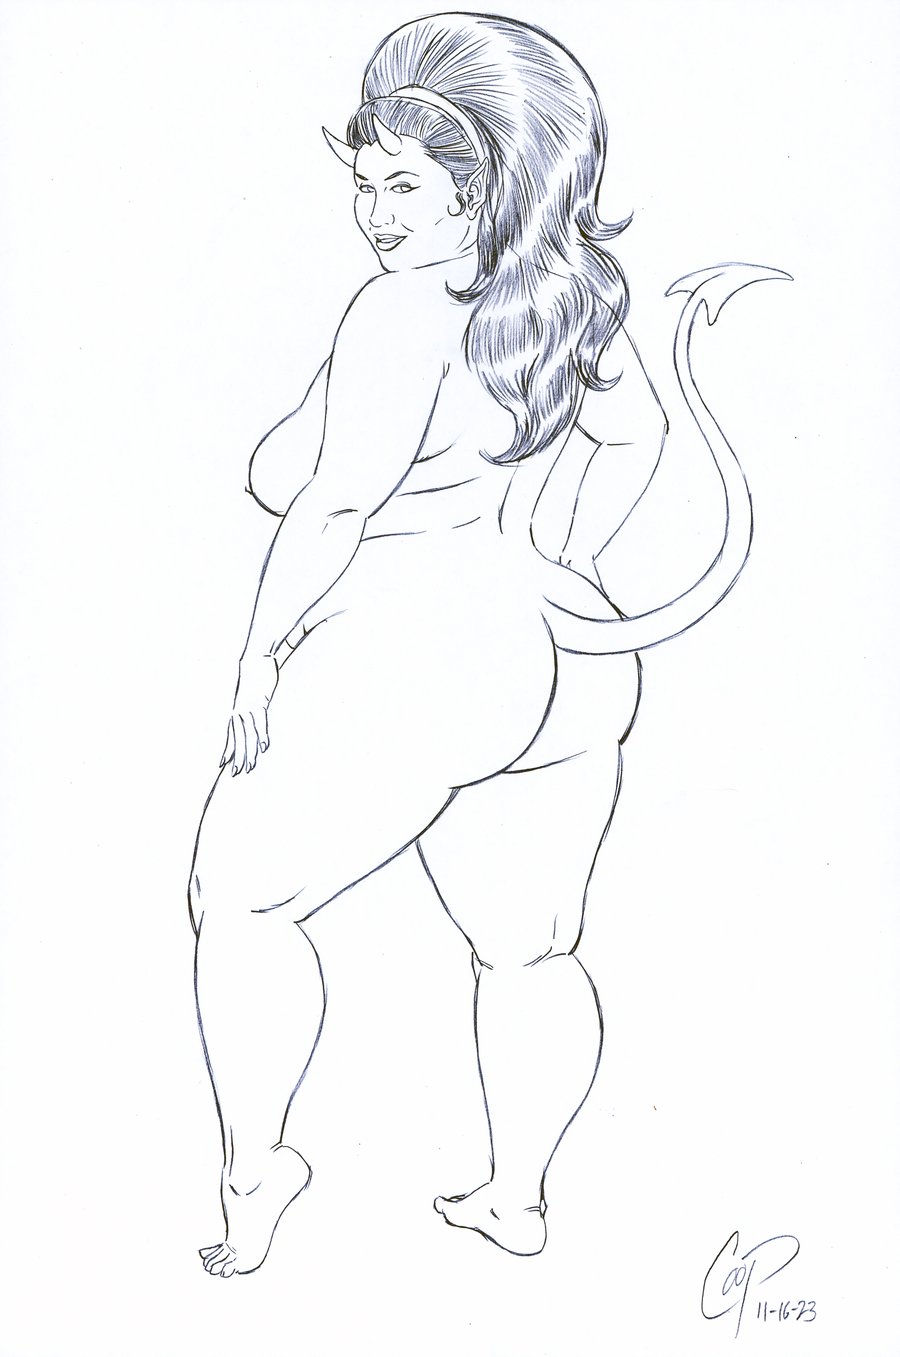 Image of THICC RETRO DEVIL GIRL Original sketch